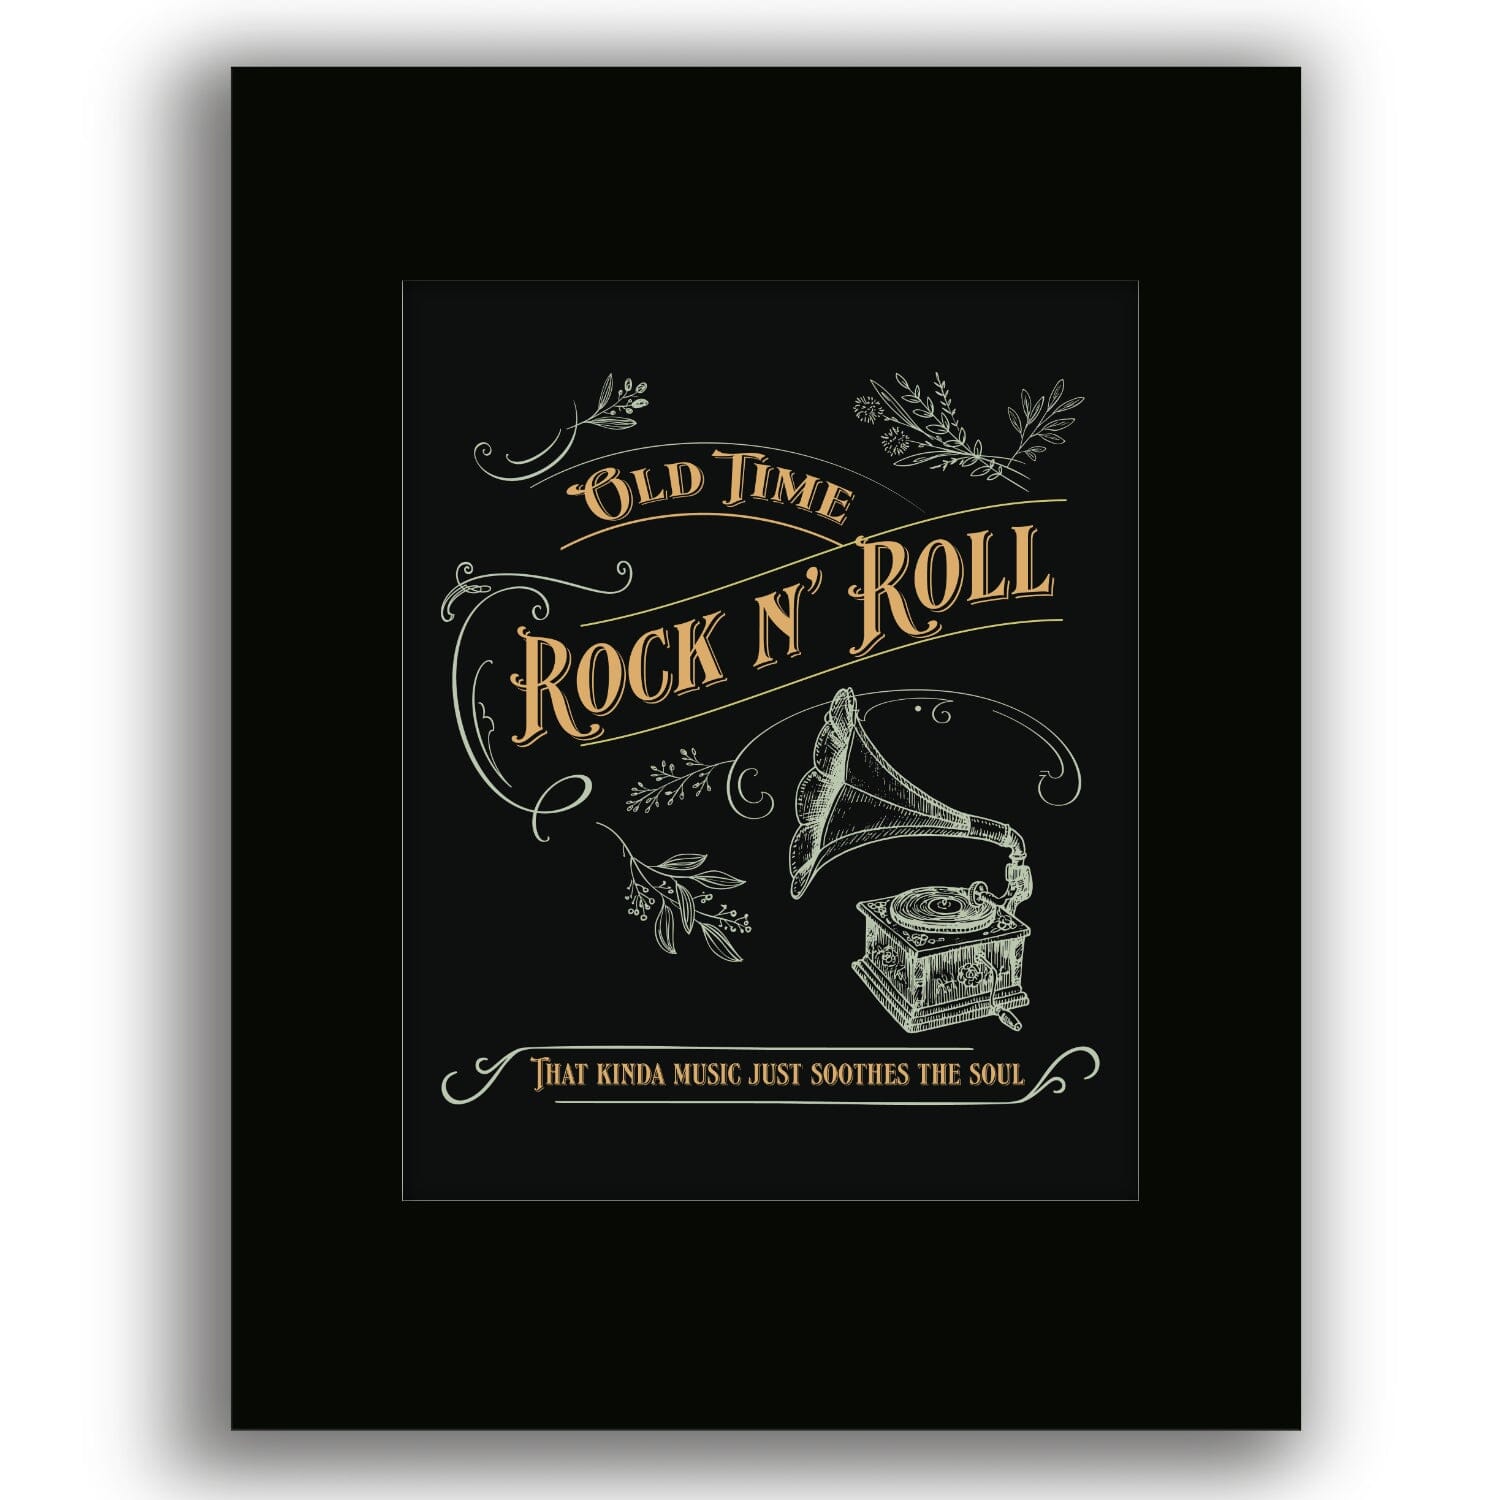 Old Time Rock N' Roll by Bob Seger - Song Lyrics Art Print Song Lyrics Art Song Lyrics Art 8x10 Unframed Black Matted Print 